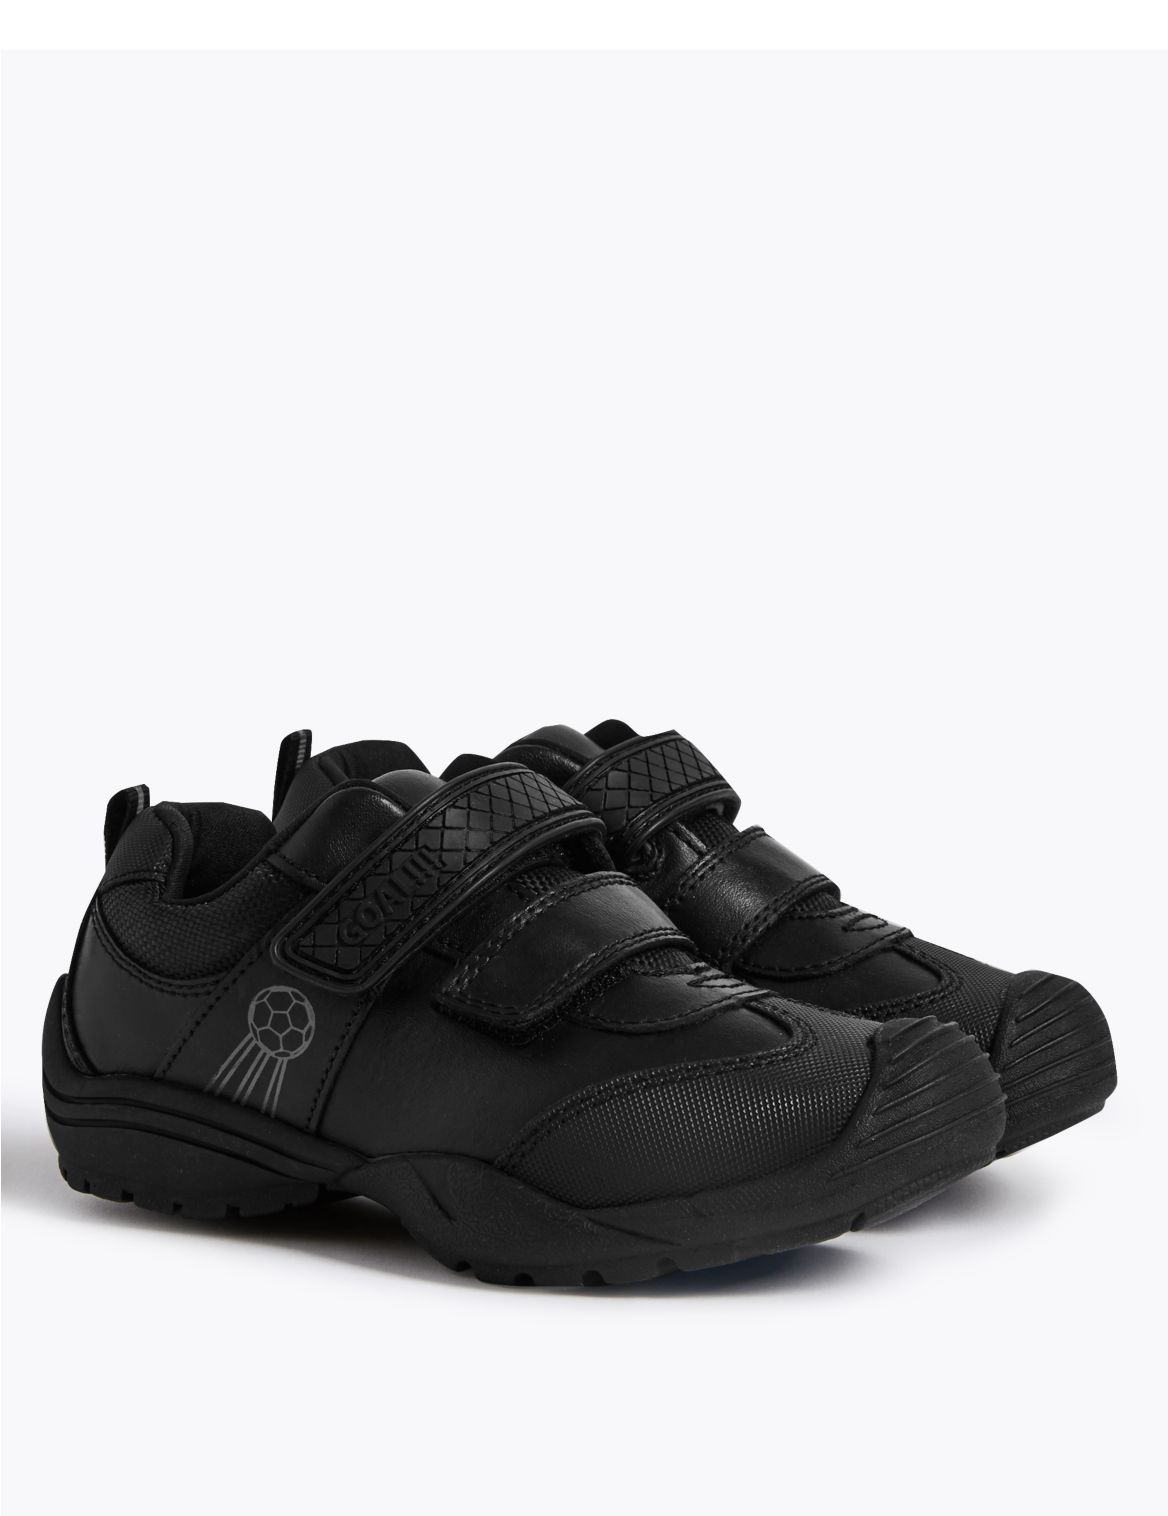 Kids’ Leather Riptape School Shoes (8 Small - 1.5 Large) black